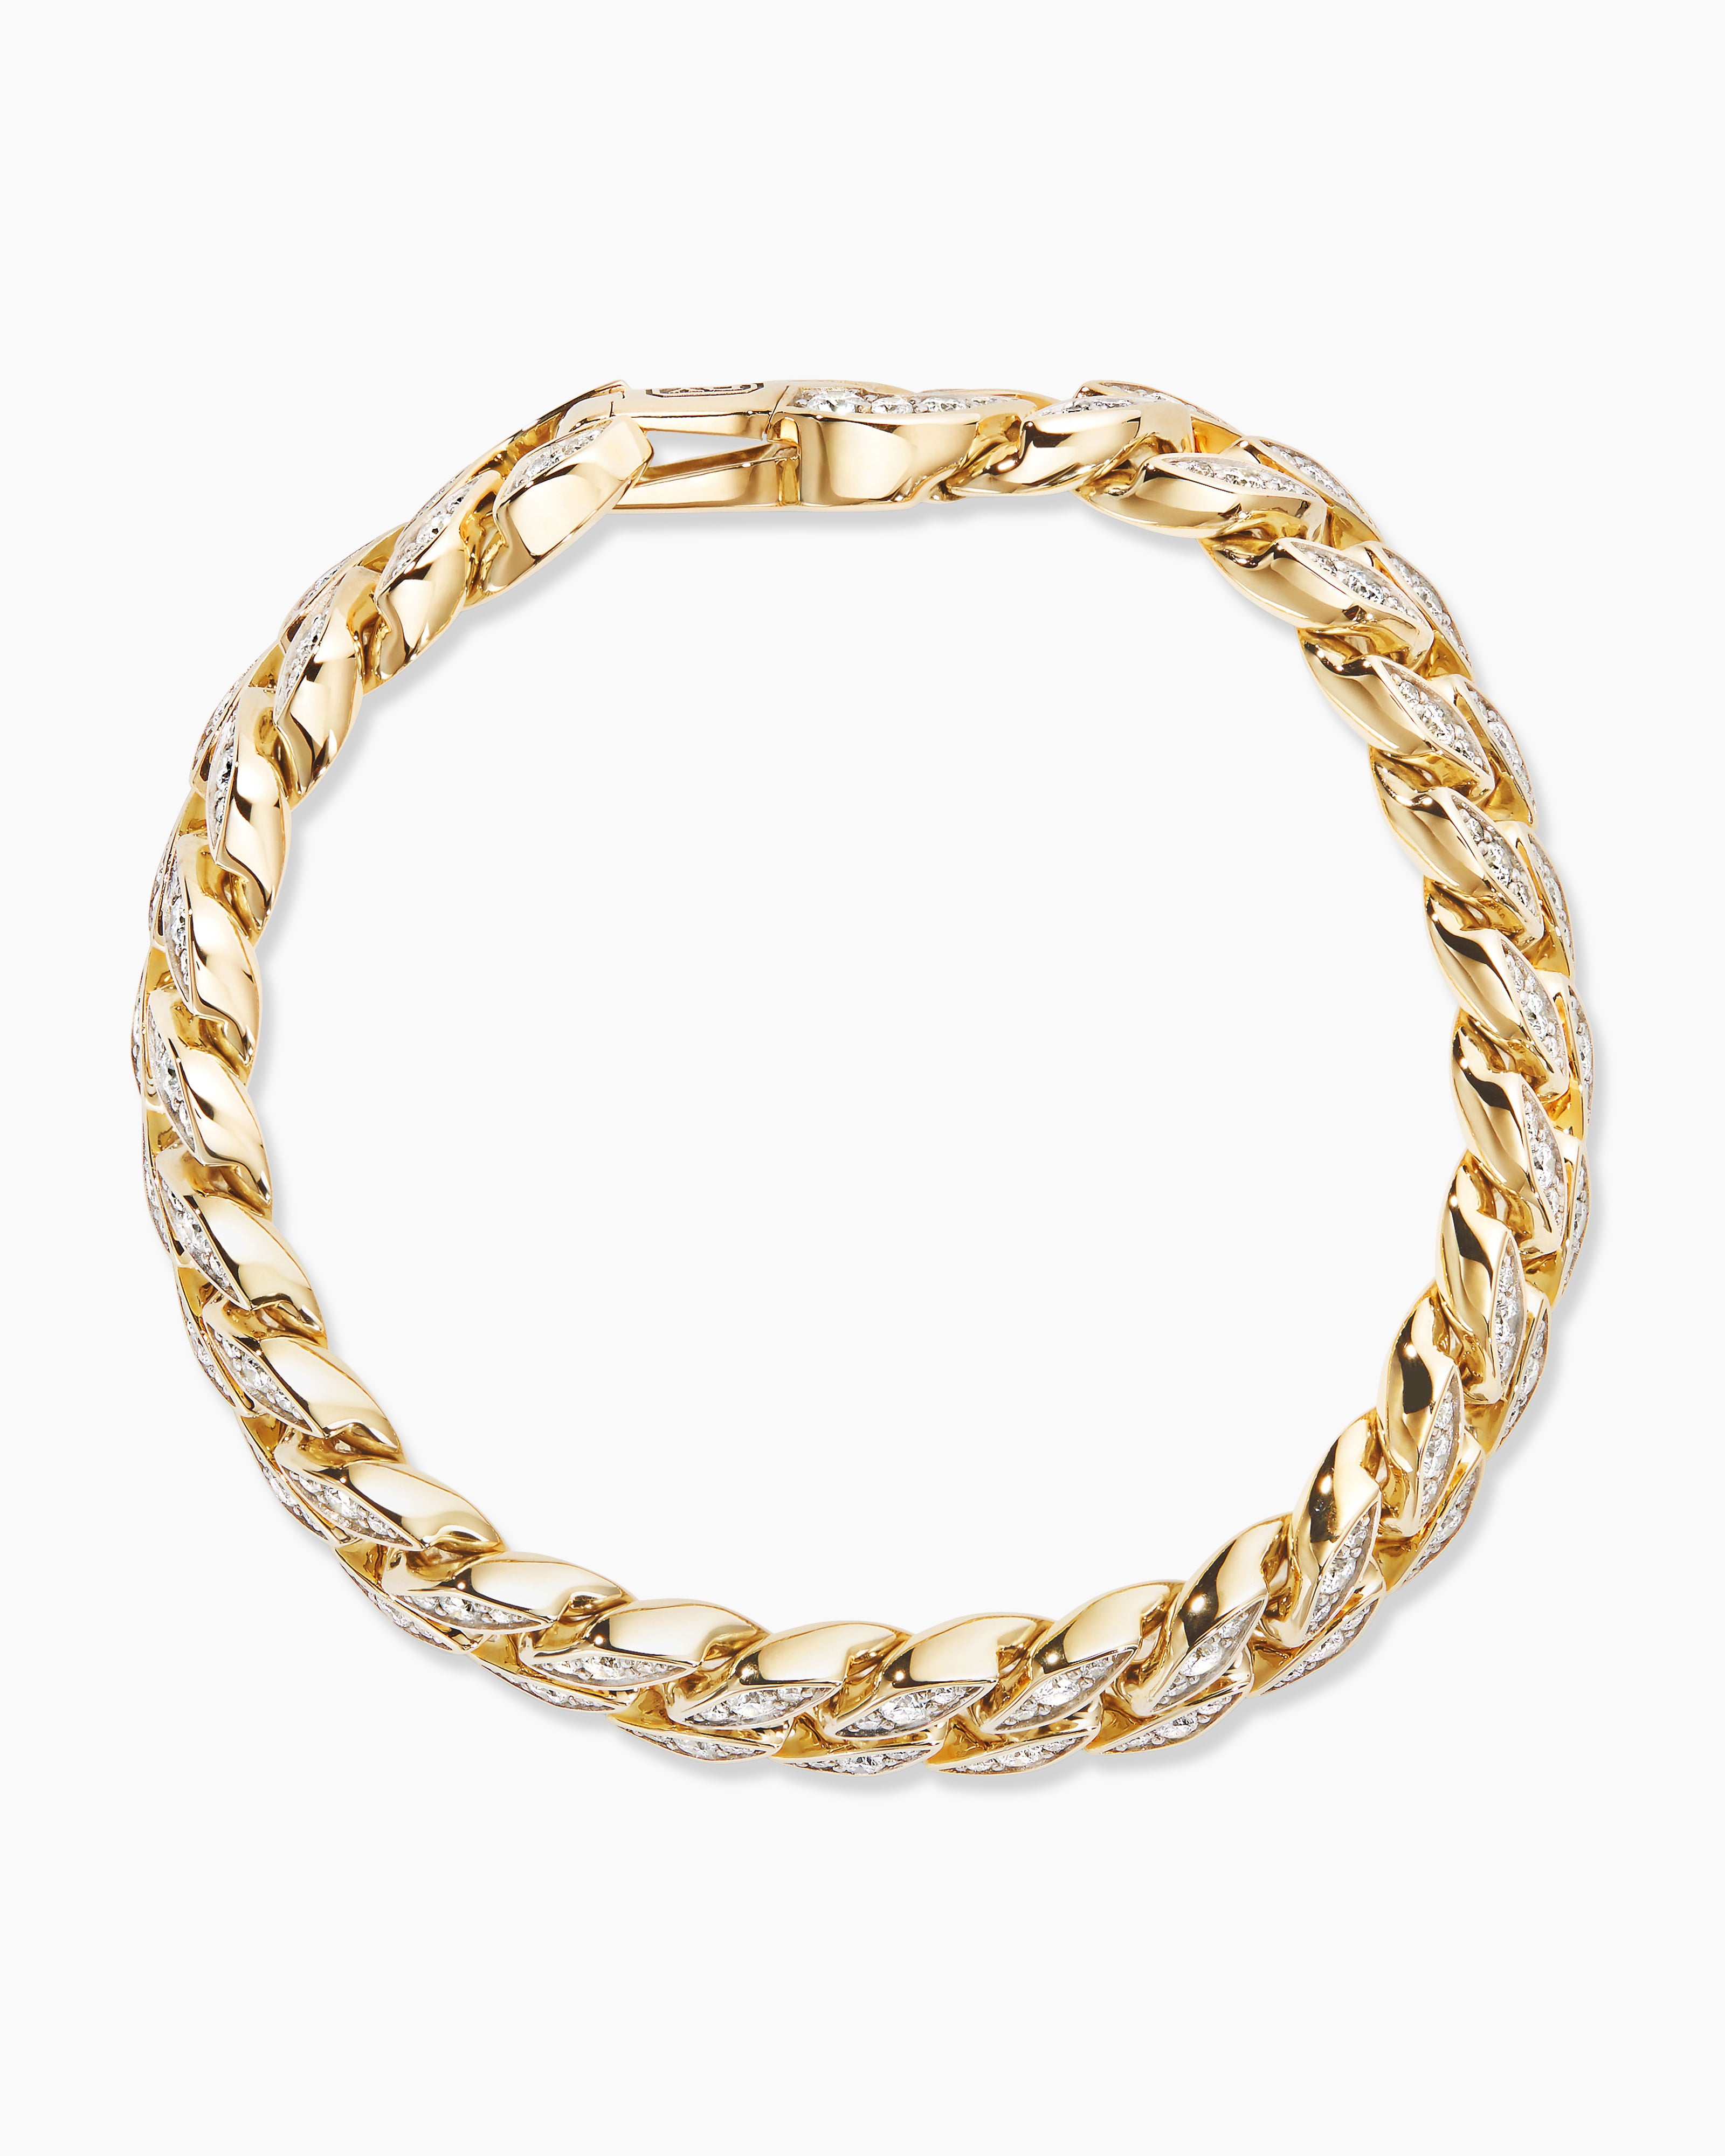 David Yurman Curb Chain Bracelet in 18K Yellow Gold with Pavu00c3u00a9  Diamonds